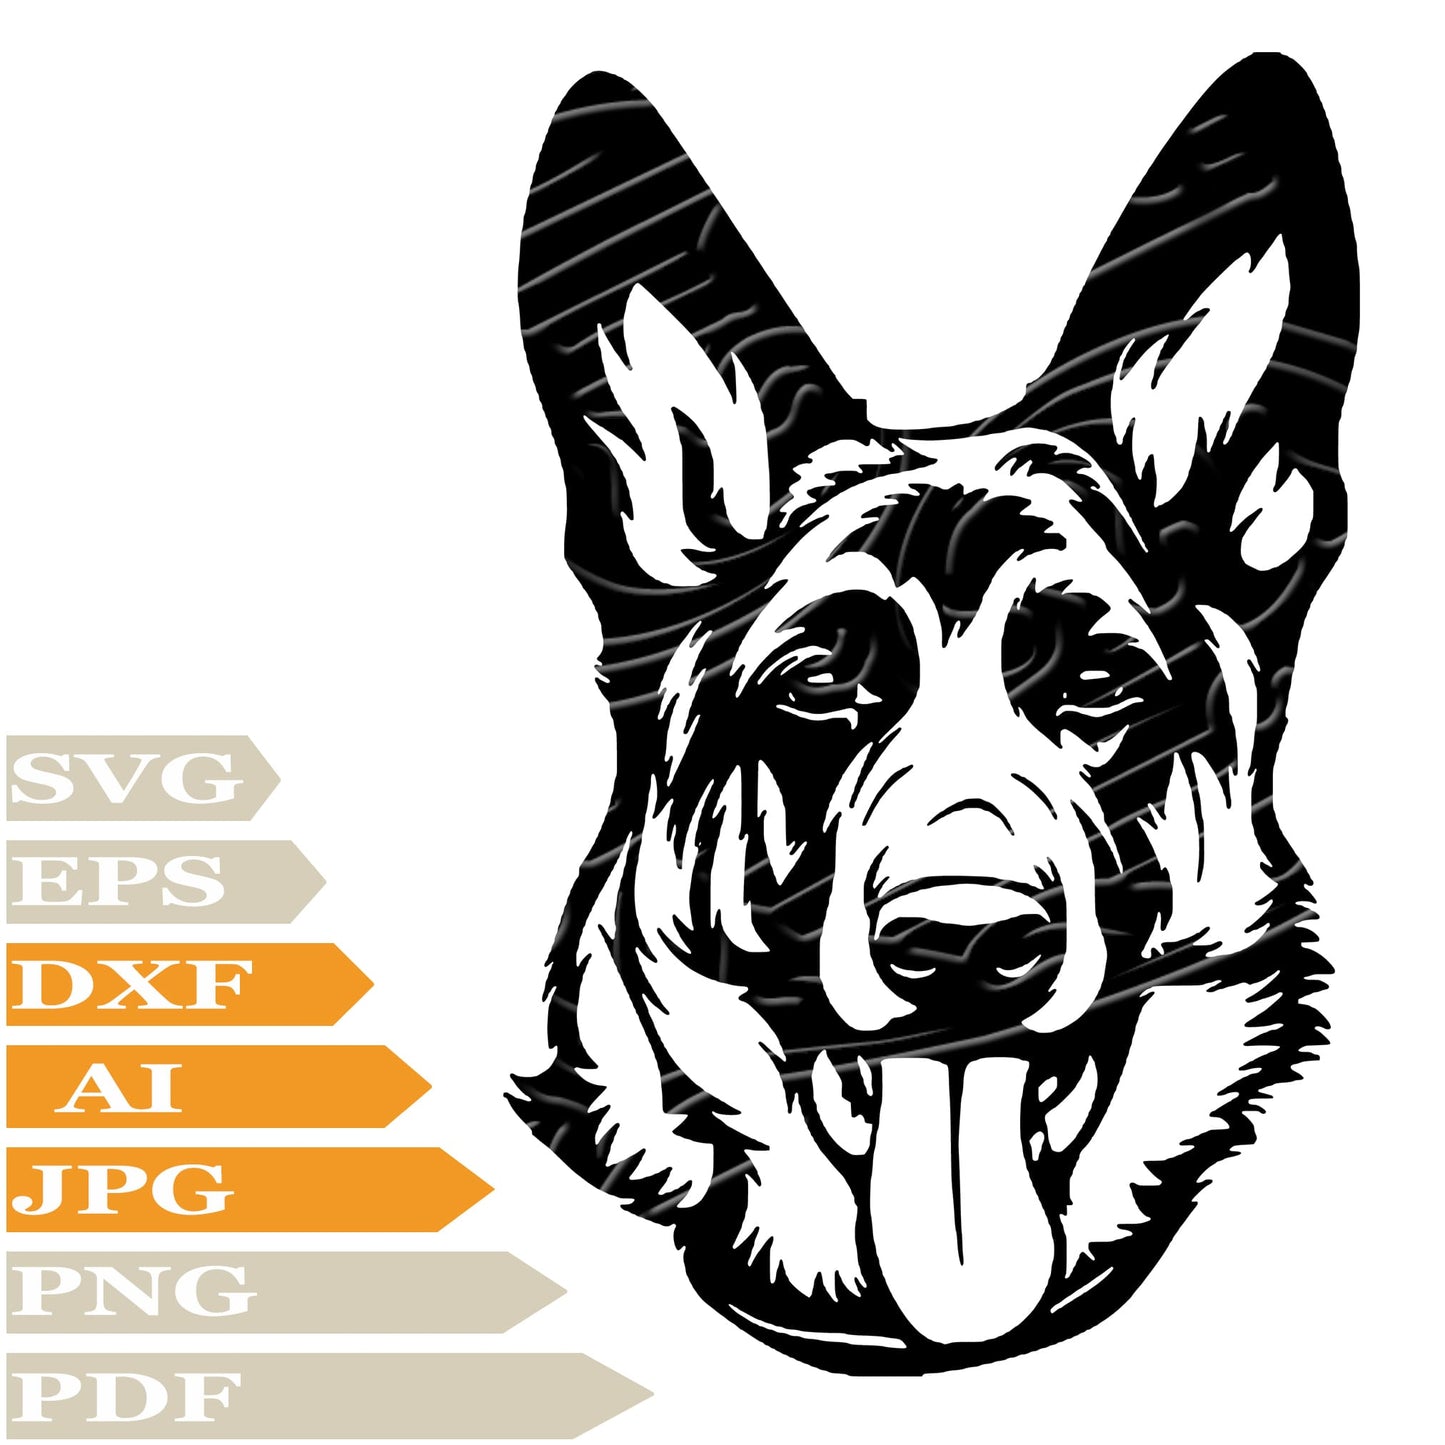 German Shepherd, German Shepherd Head Svg File, Image Cut, Png, For Tattoo, Silhouette, Digital Vector Download, Cut File, Clipart, For Cricut